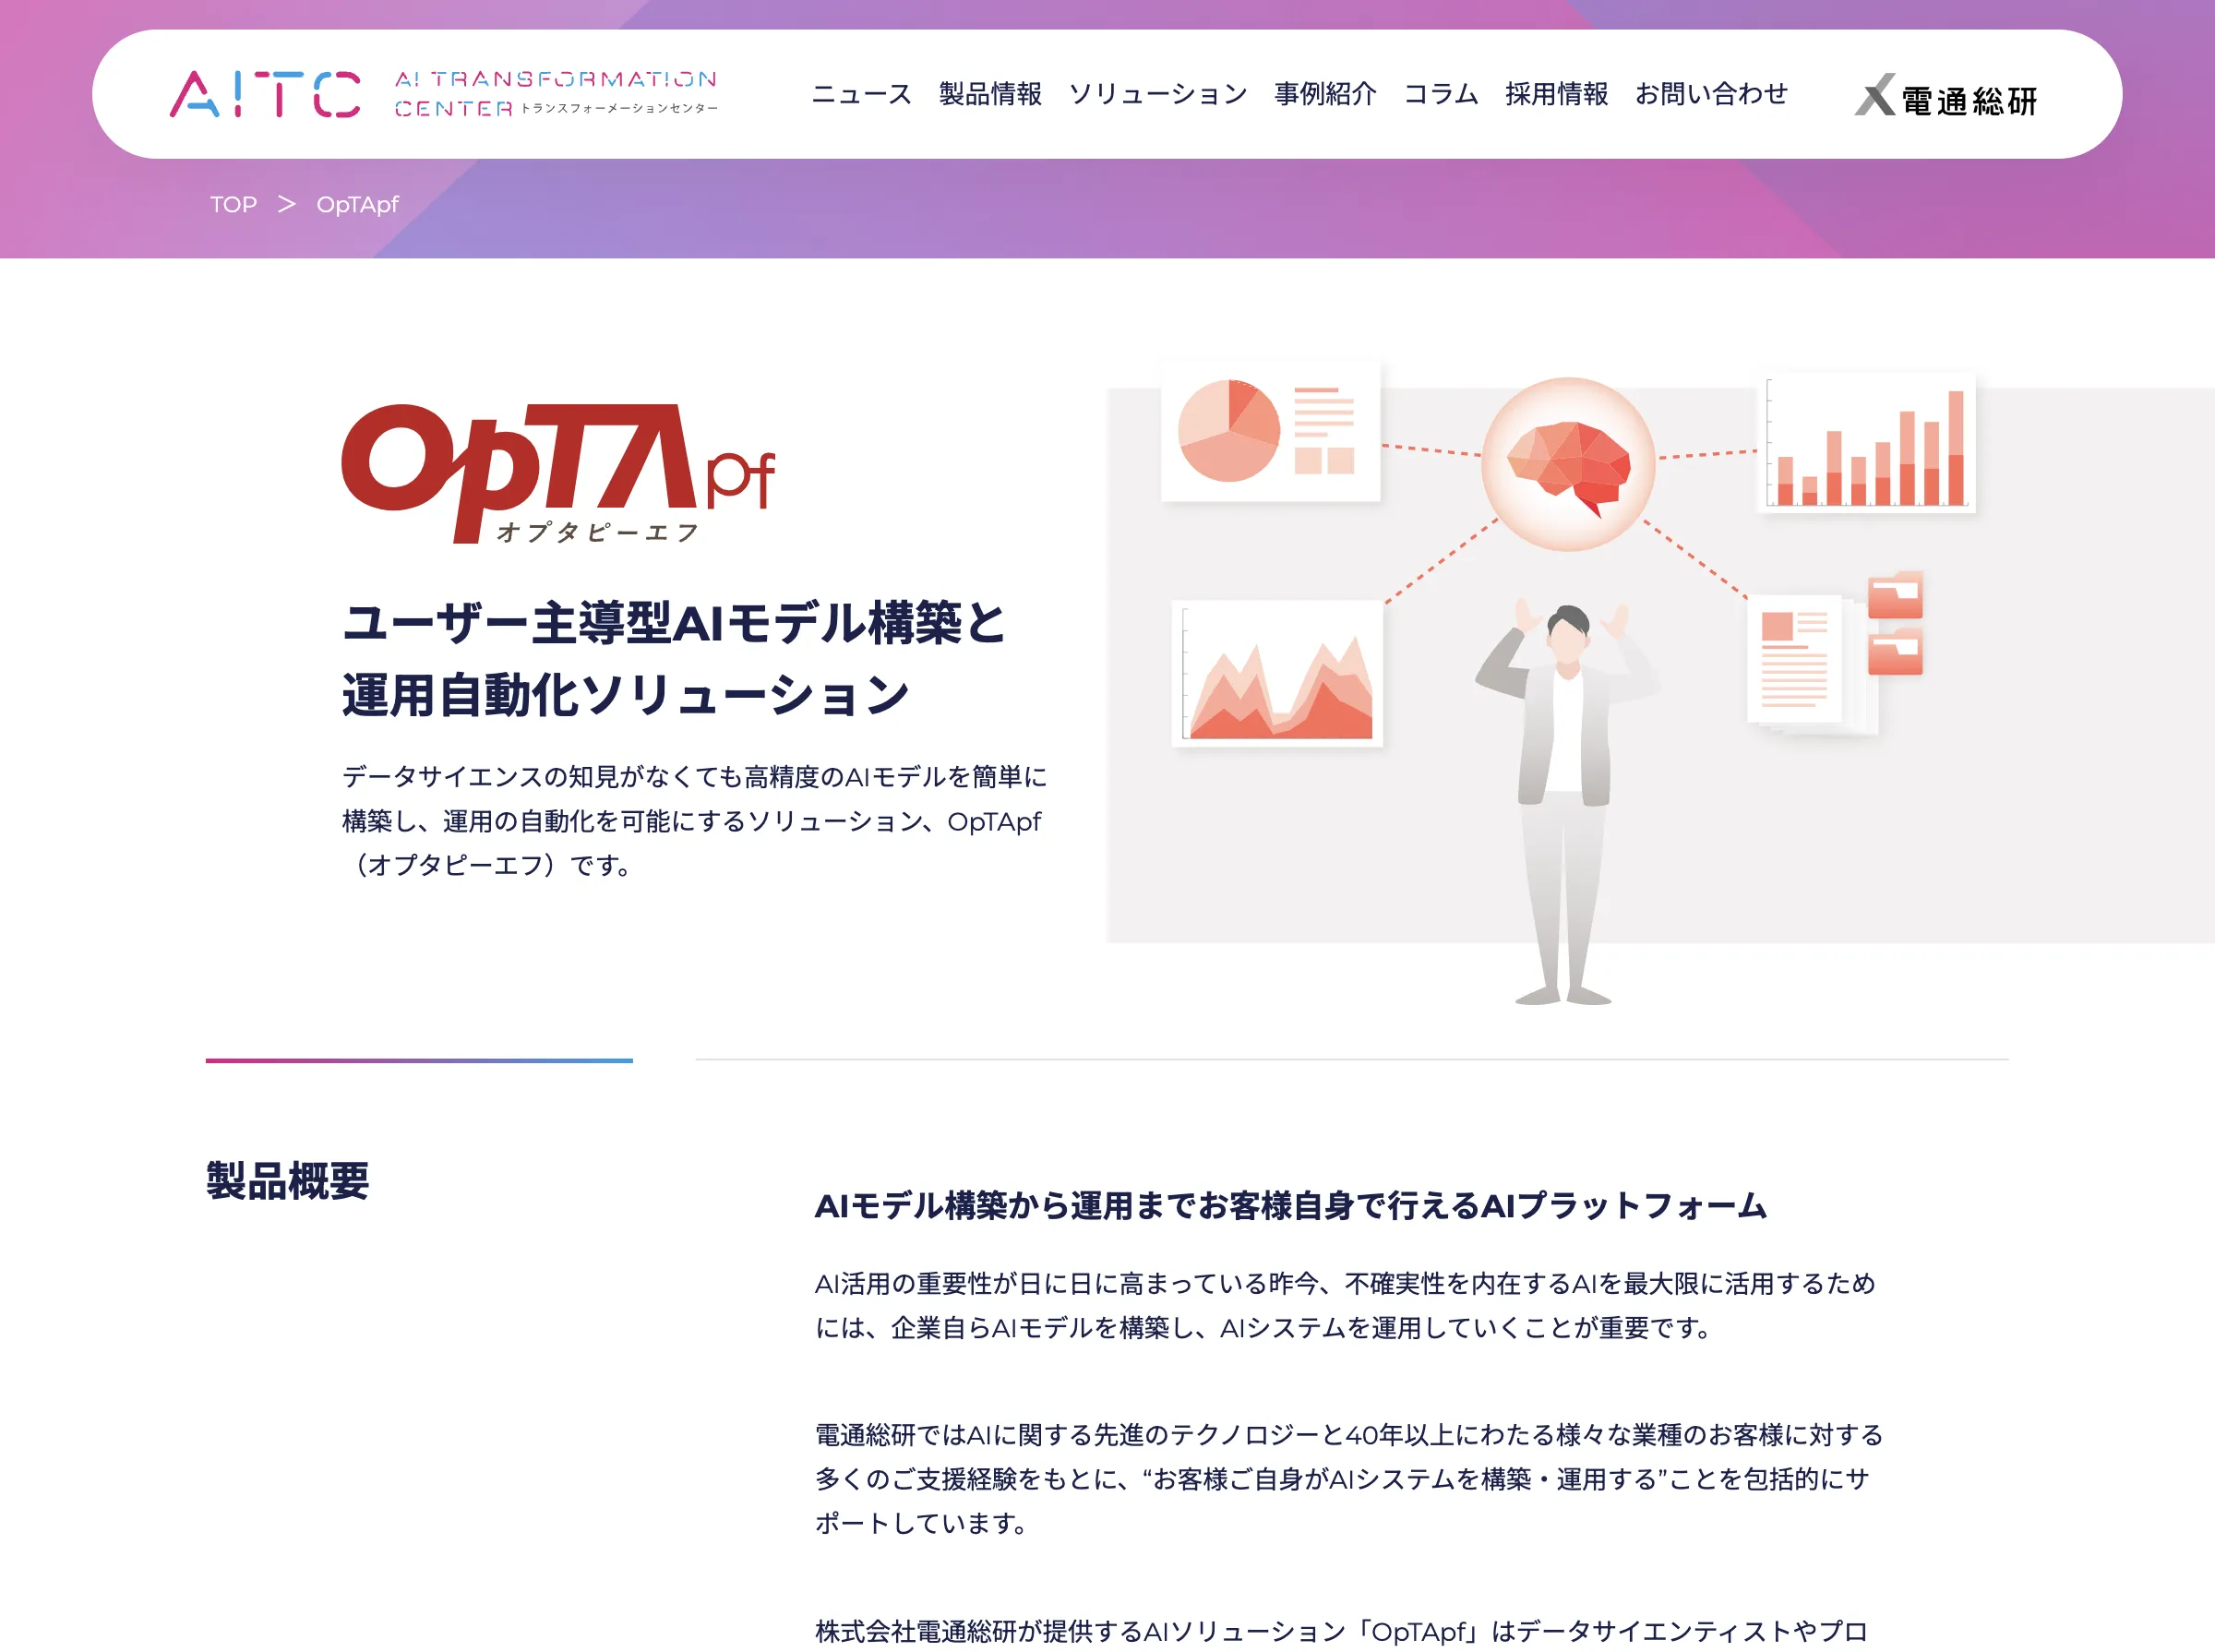 OpTApf(株式会社電通国際情報サービス)